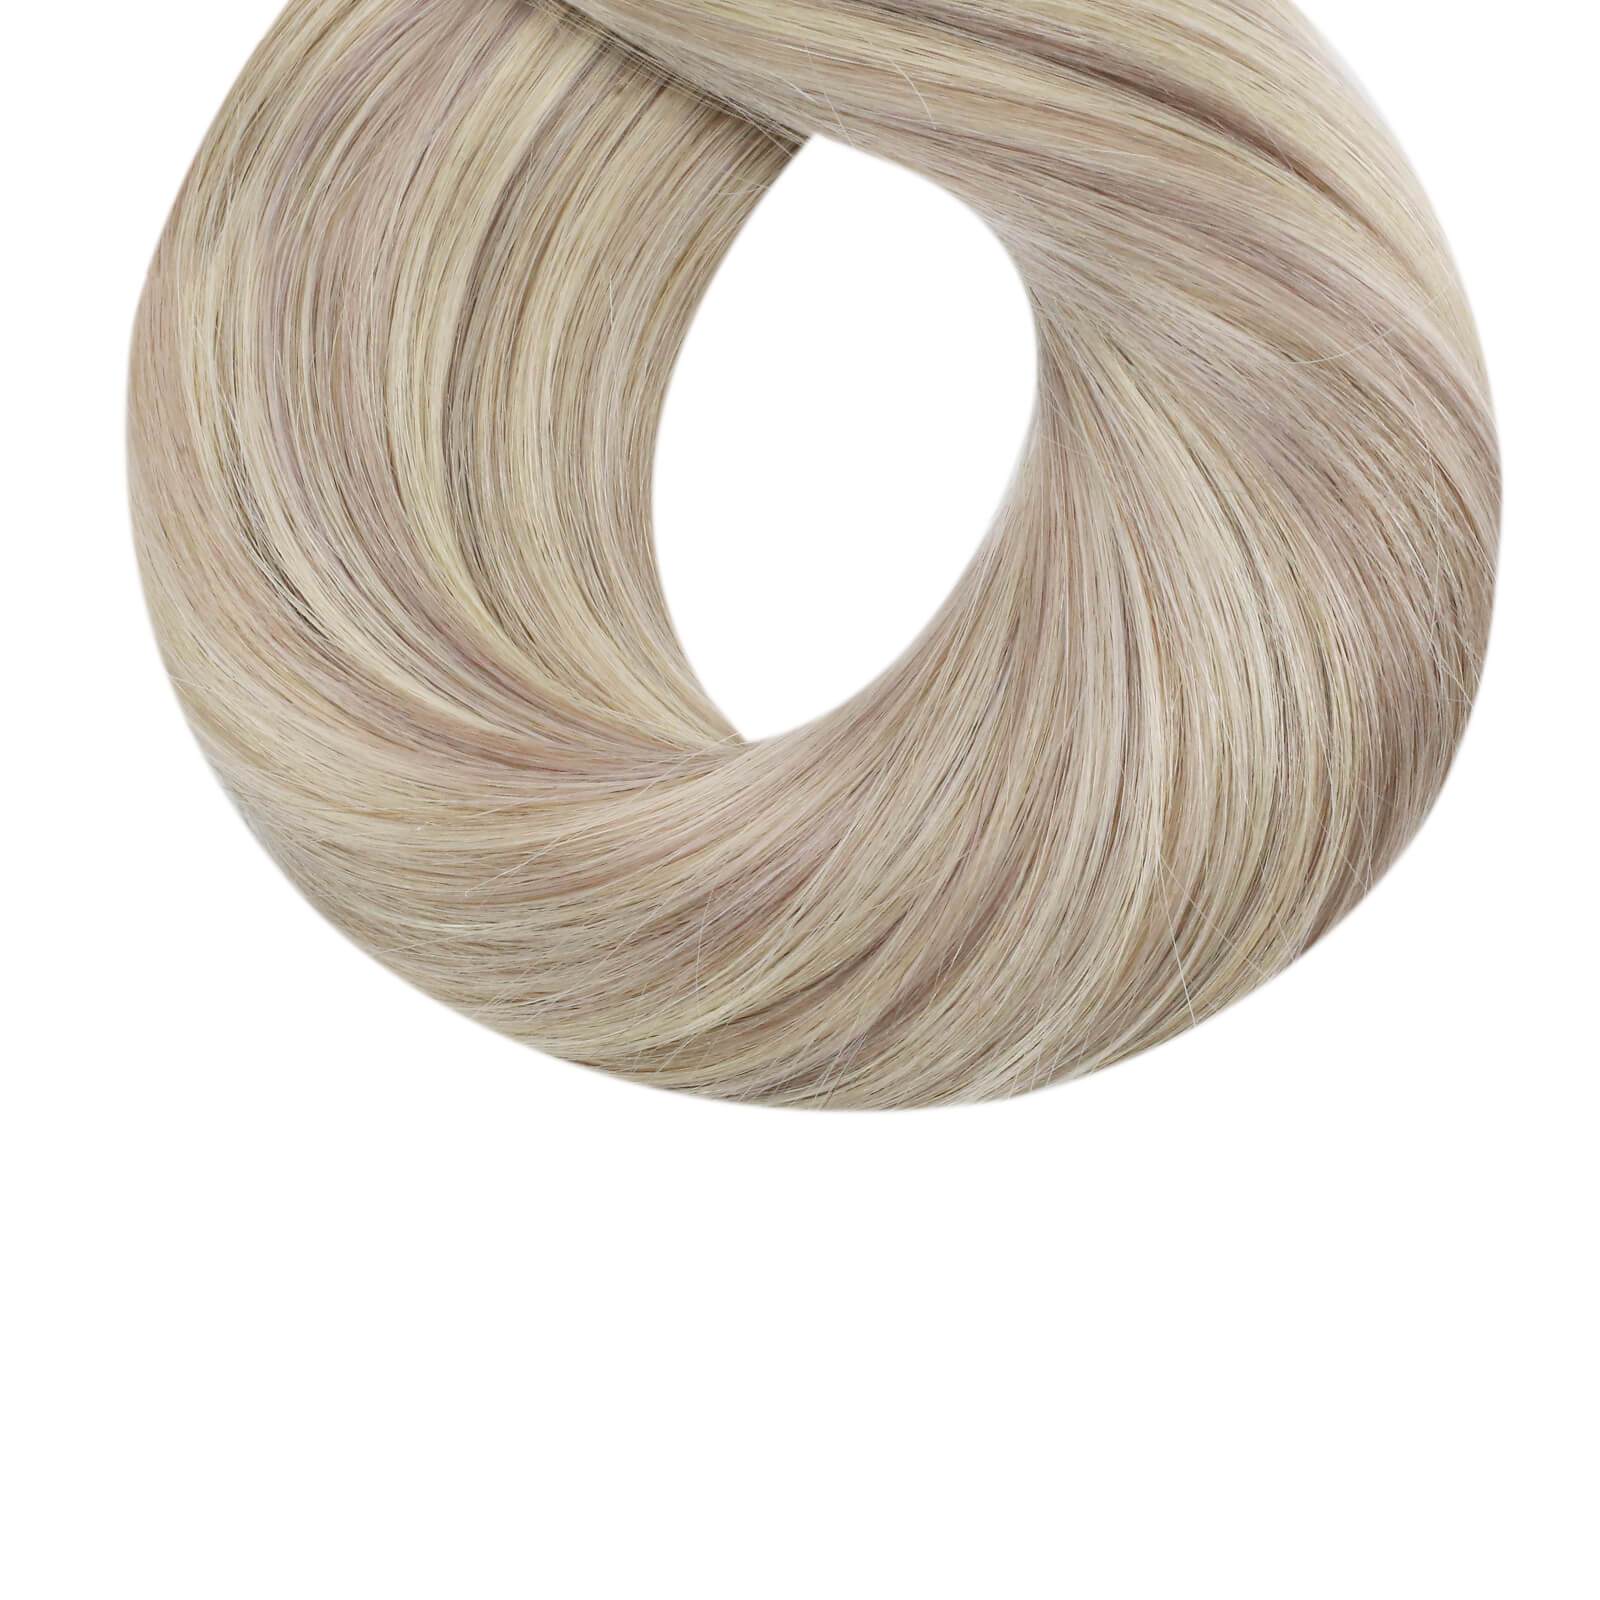 Keratin Utip Human Hair Extensions 16inch Balayage Blonde Real Human Hair